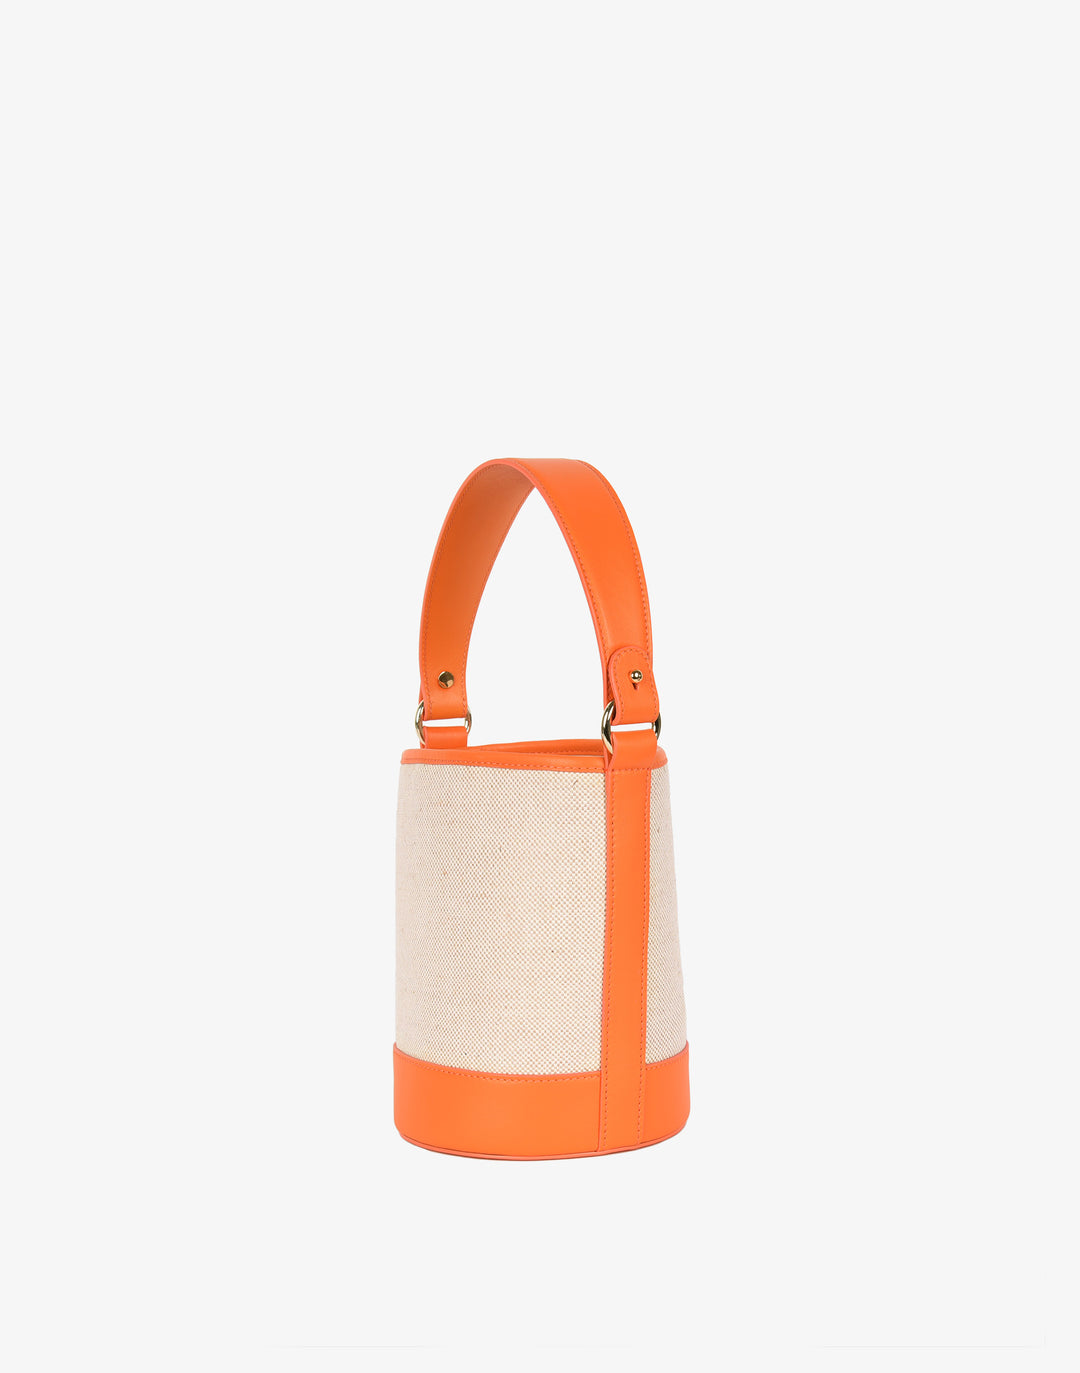 6oz. Home Basics Tote Bag by R&R Textile Mills, Inc.